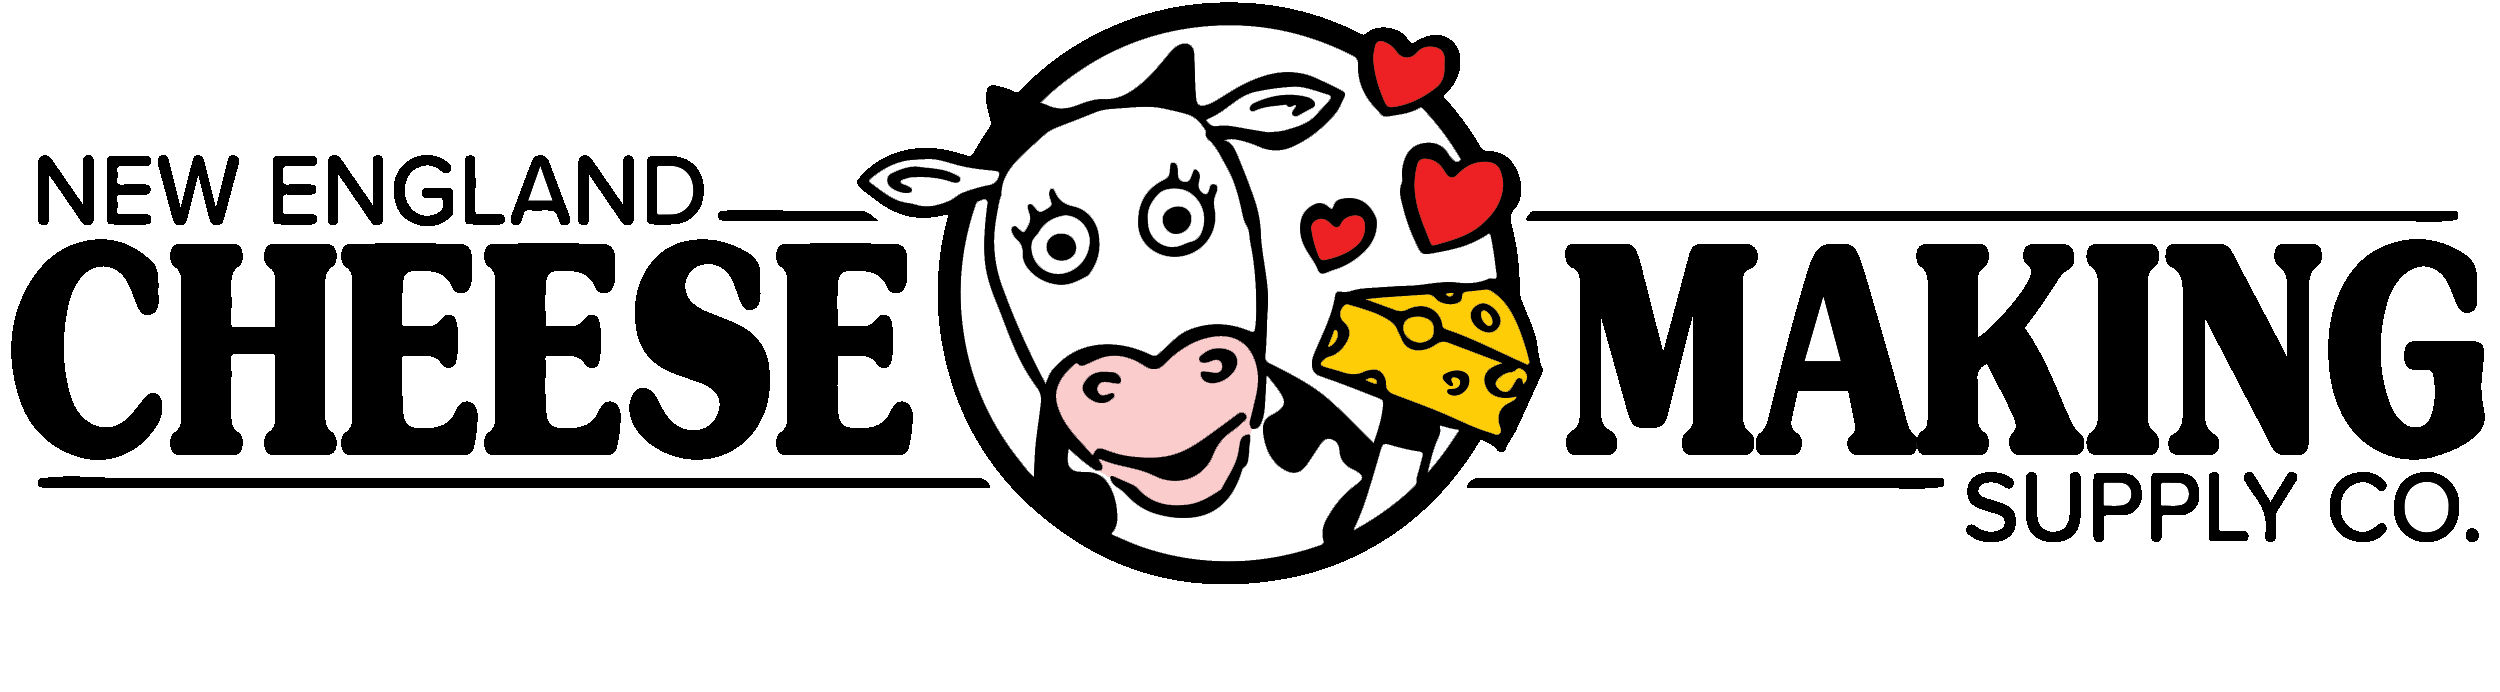 New England Cheesemaking Supply Company Logo